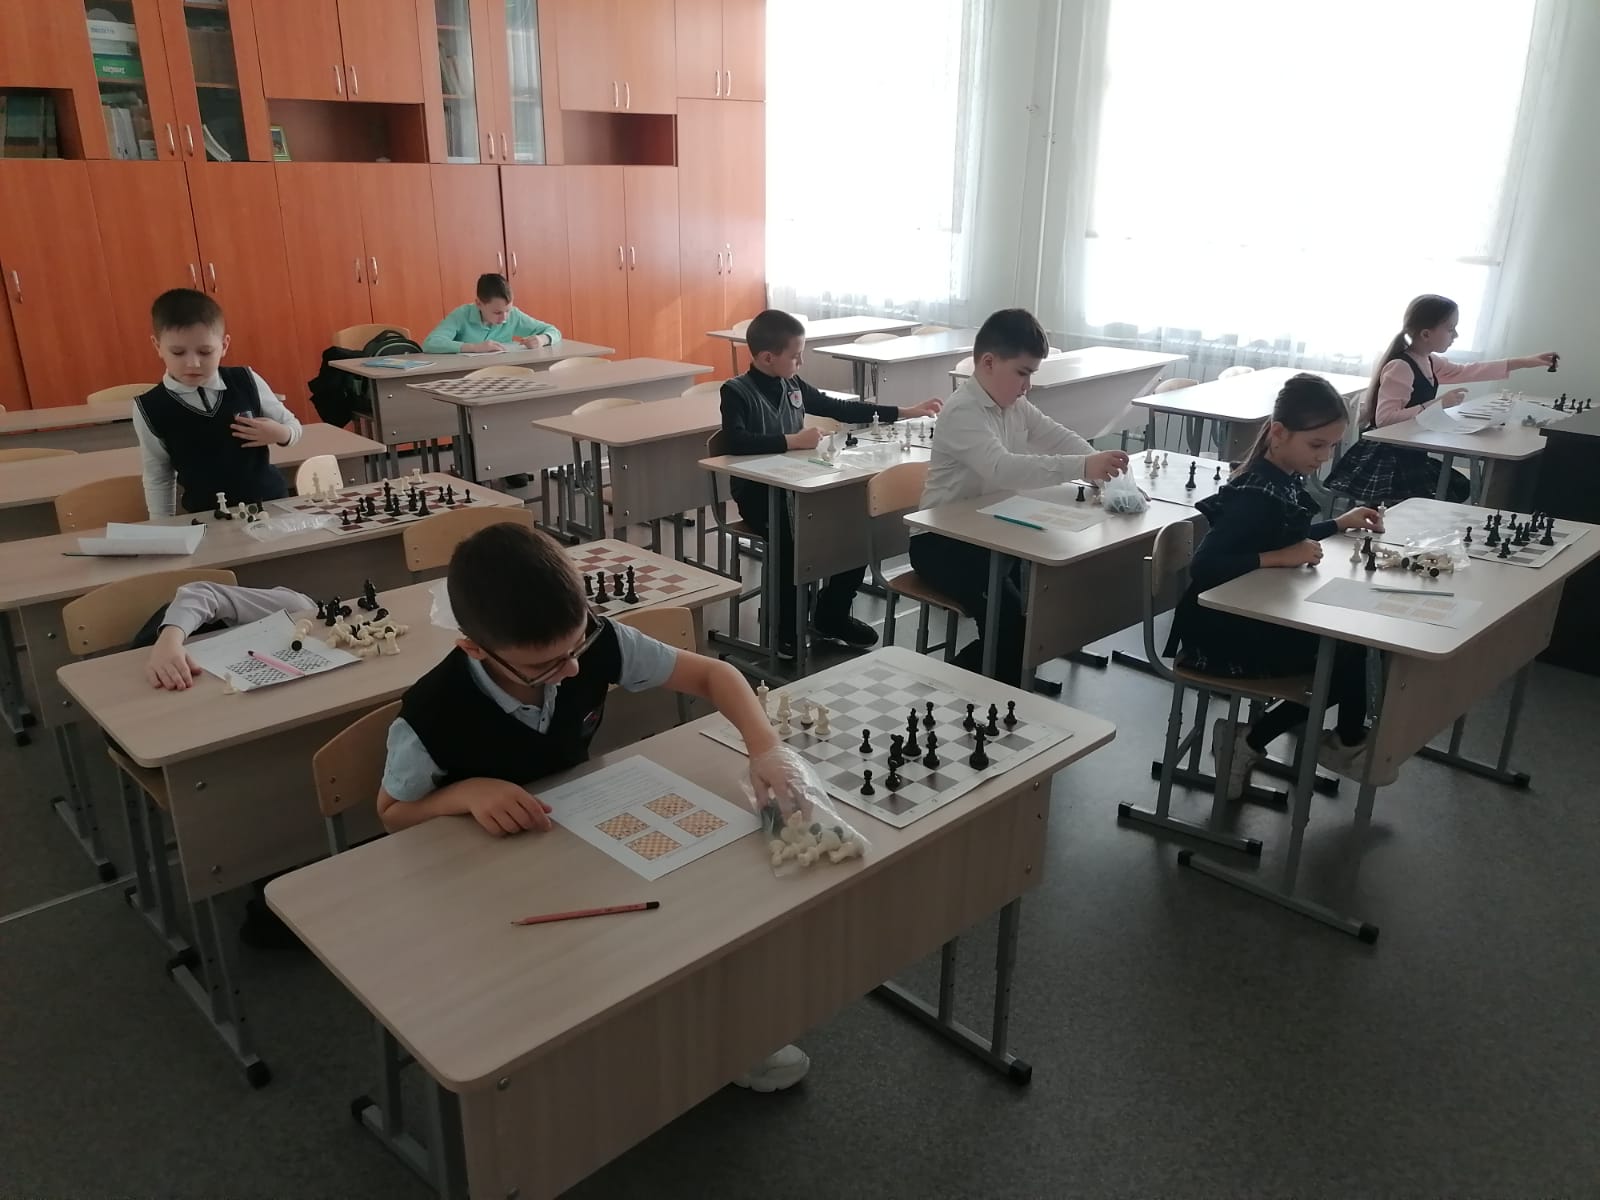 школьный этап олимпиады по шахматам.